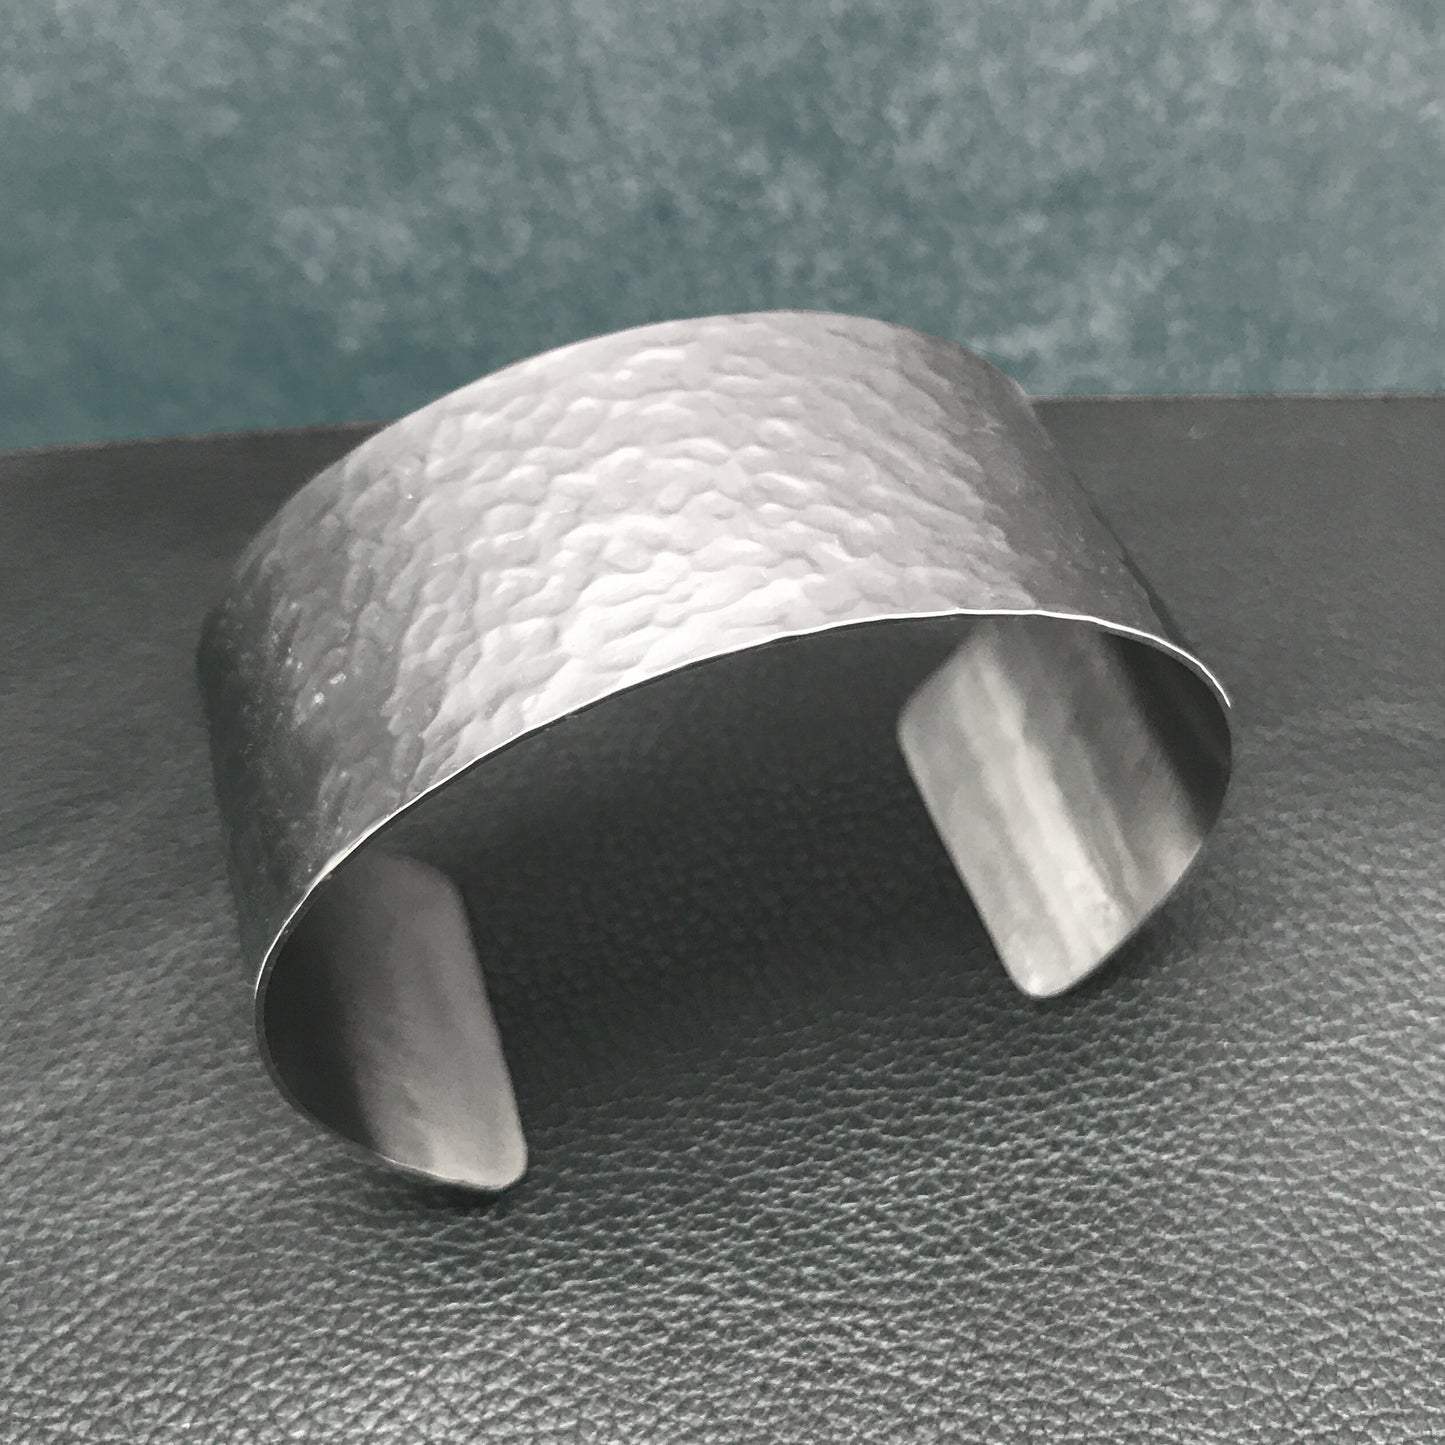 Adjustable Wide Stainless Steel Cuff Bracelet, Hand Hammered Texture, 1.25 Inch Wide Silver Cuff, Non Tarnish, Waterproof, Wide Band Cuff